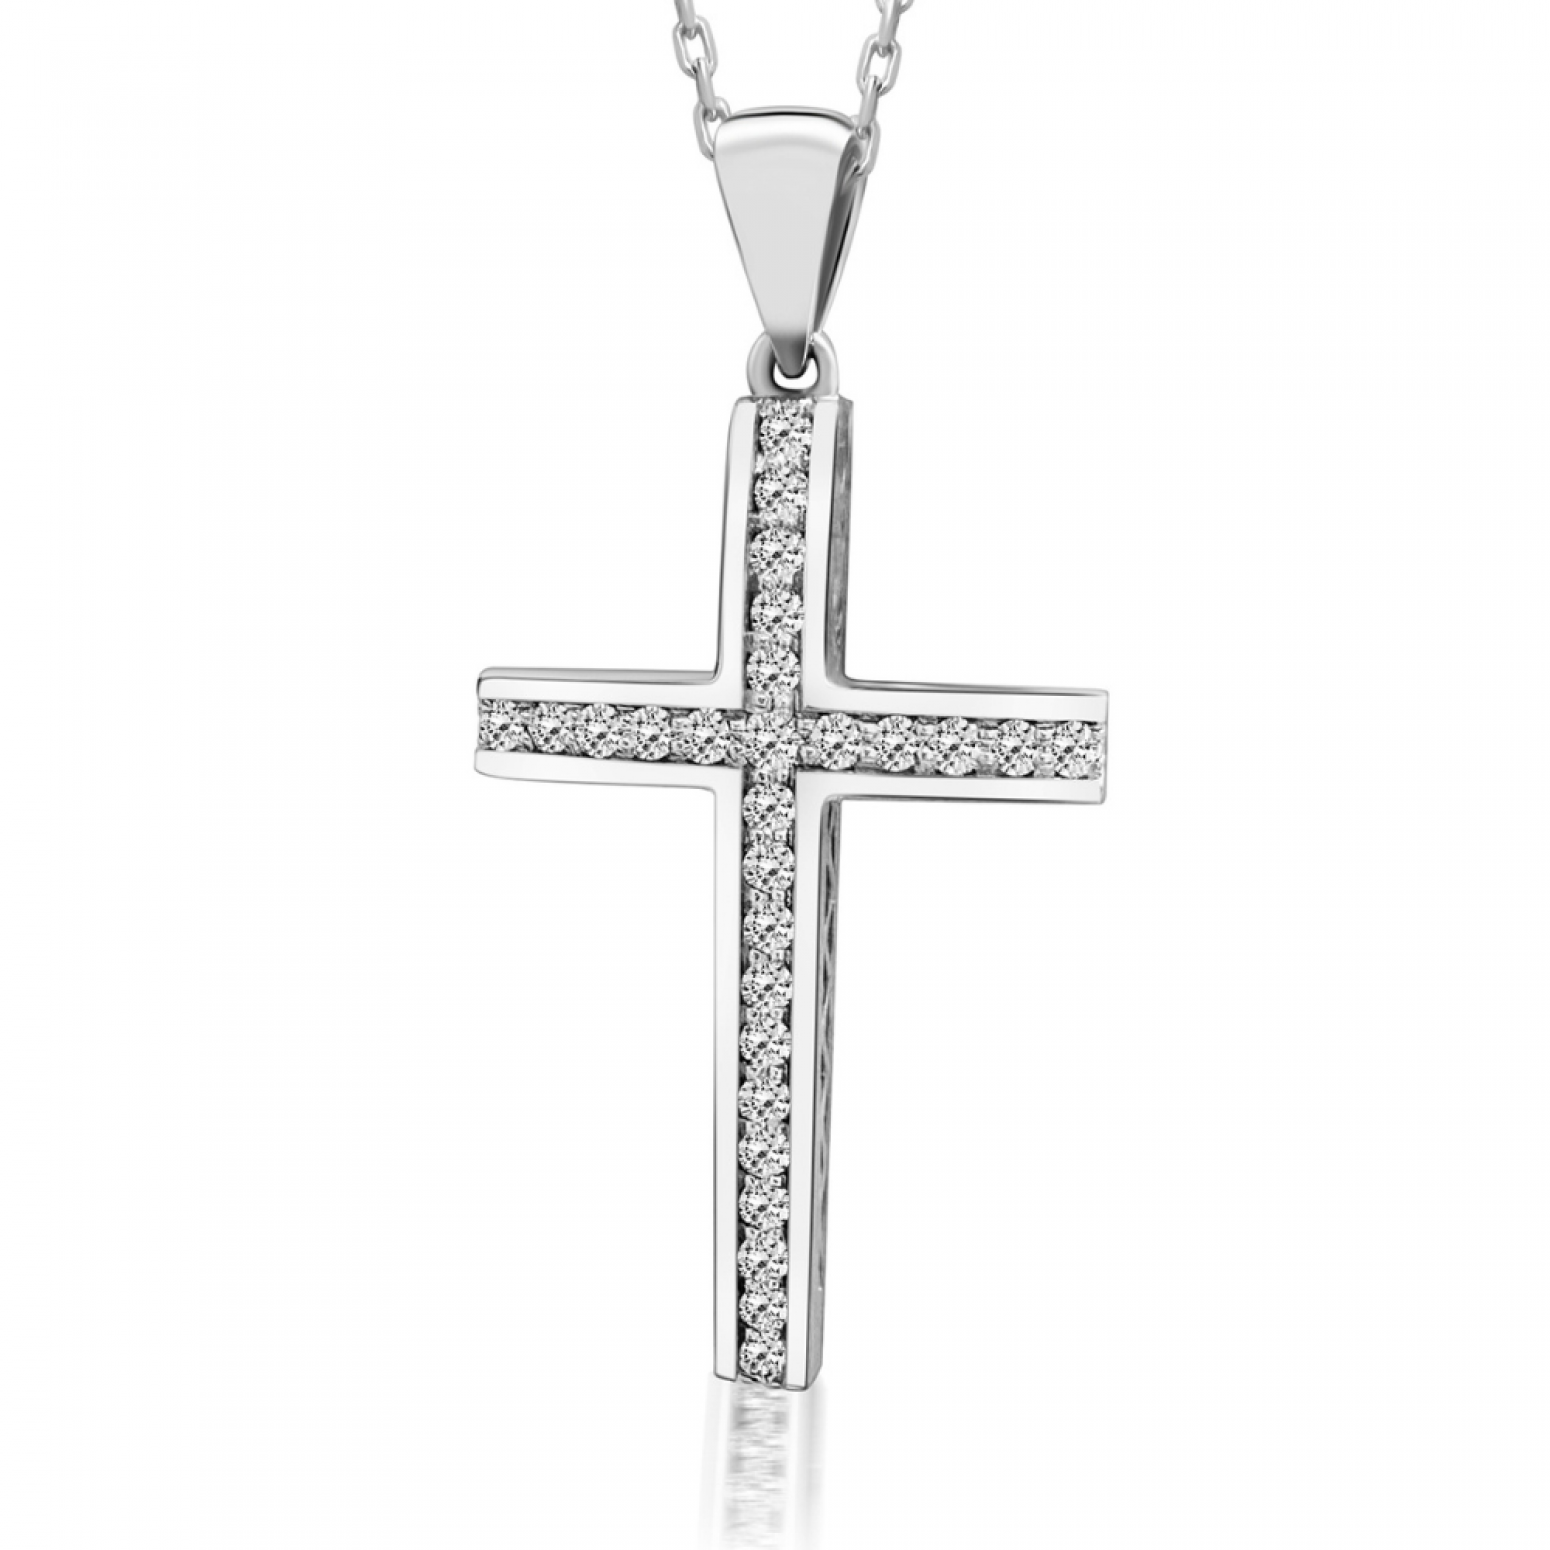 Baptism cross with chain K18 white gold with diamonds 0.18ct, VS1, G ko6078 CROSSES Κοσμηματα - chrilia.gr